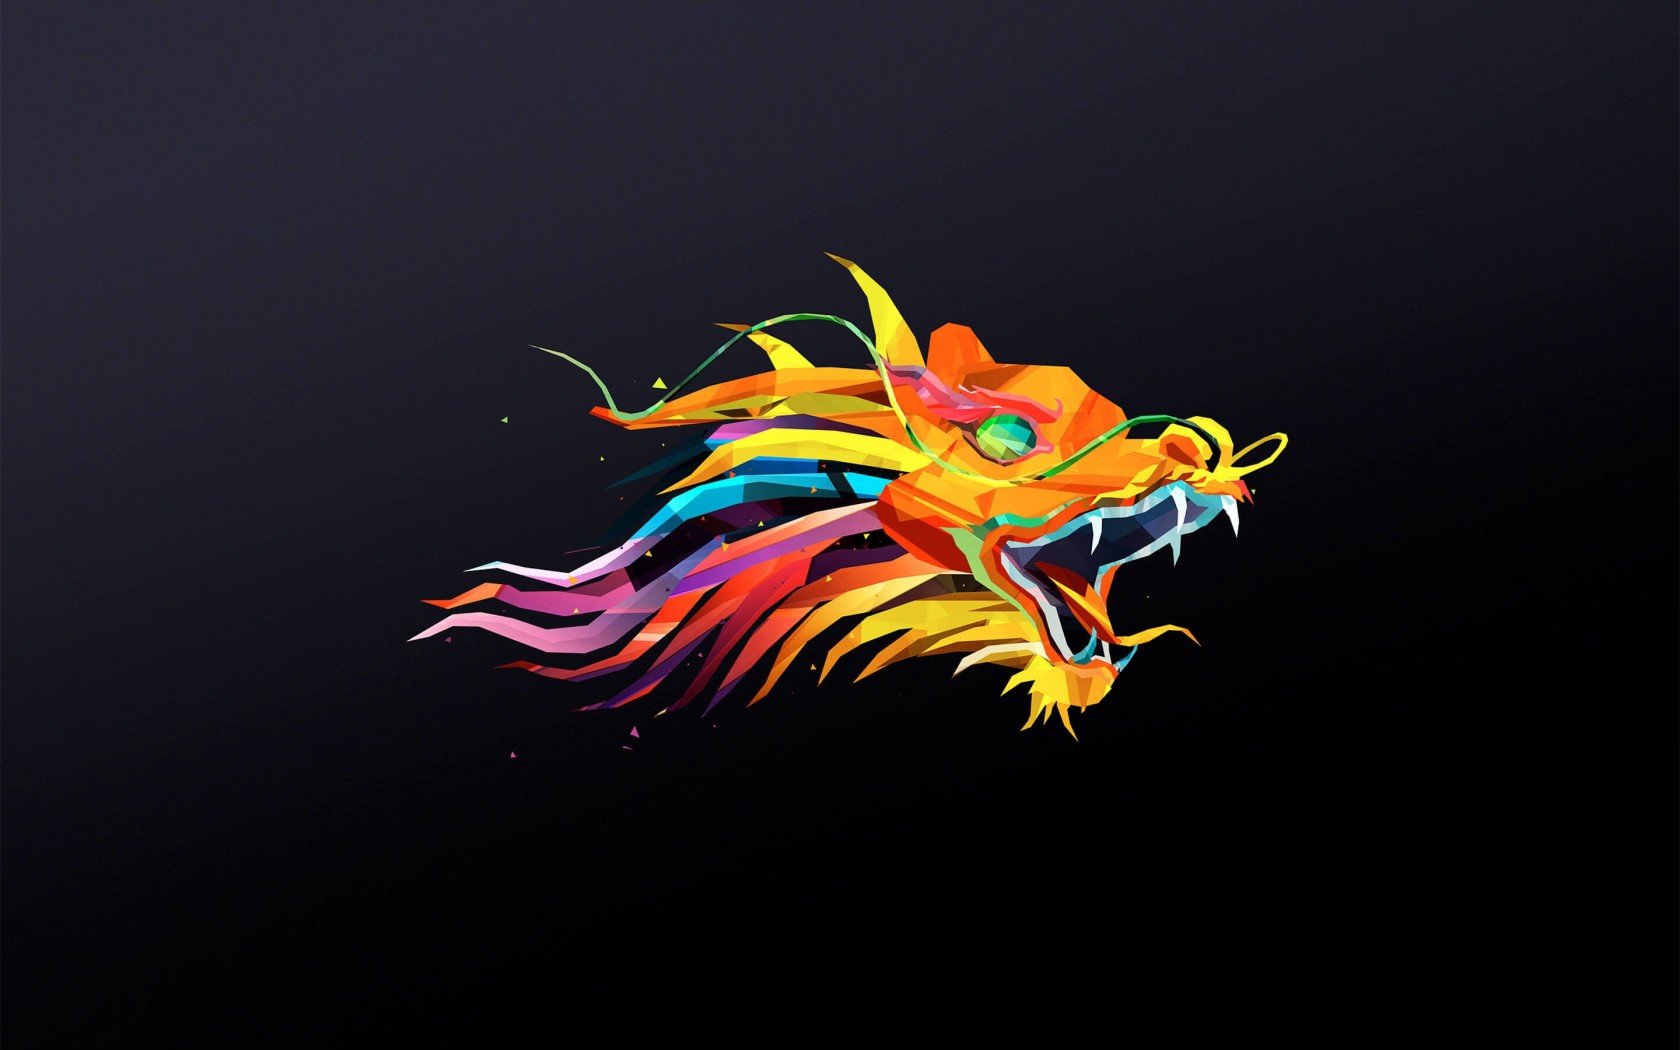 The Dragon Wallpaper for Desktop 1680x1050